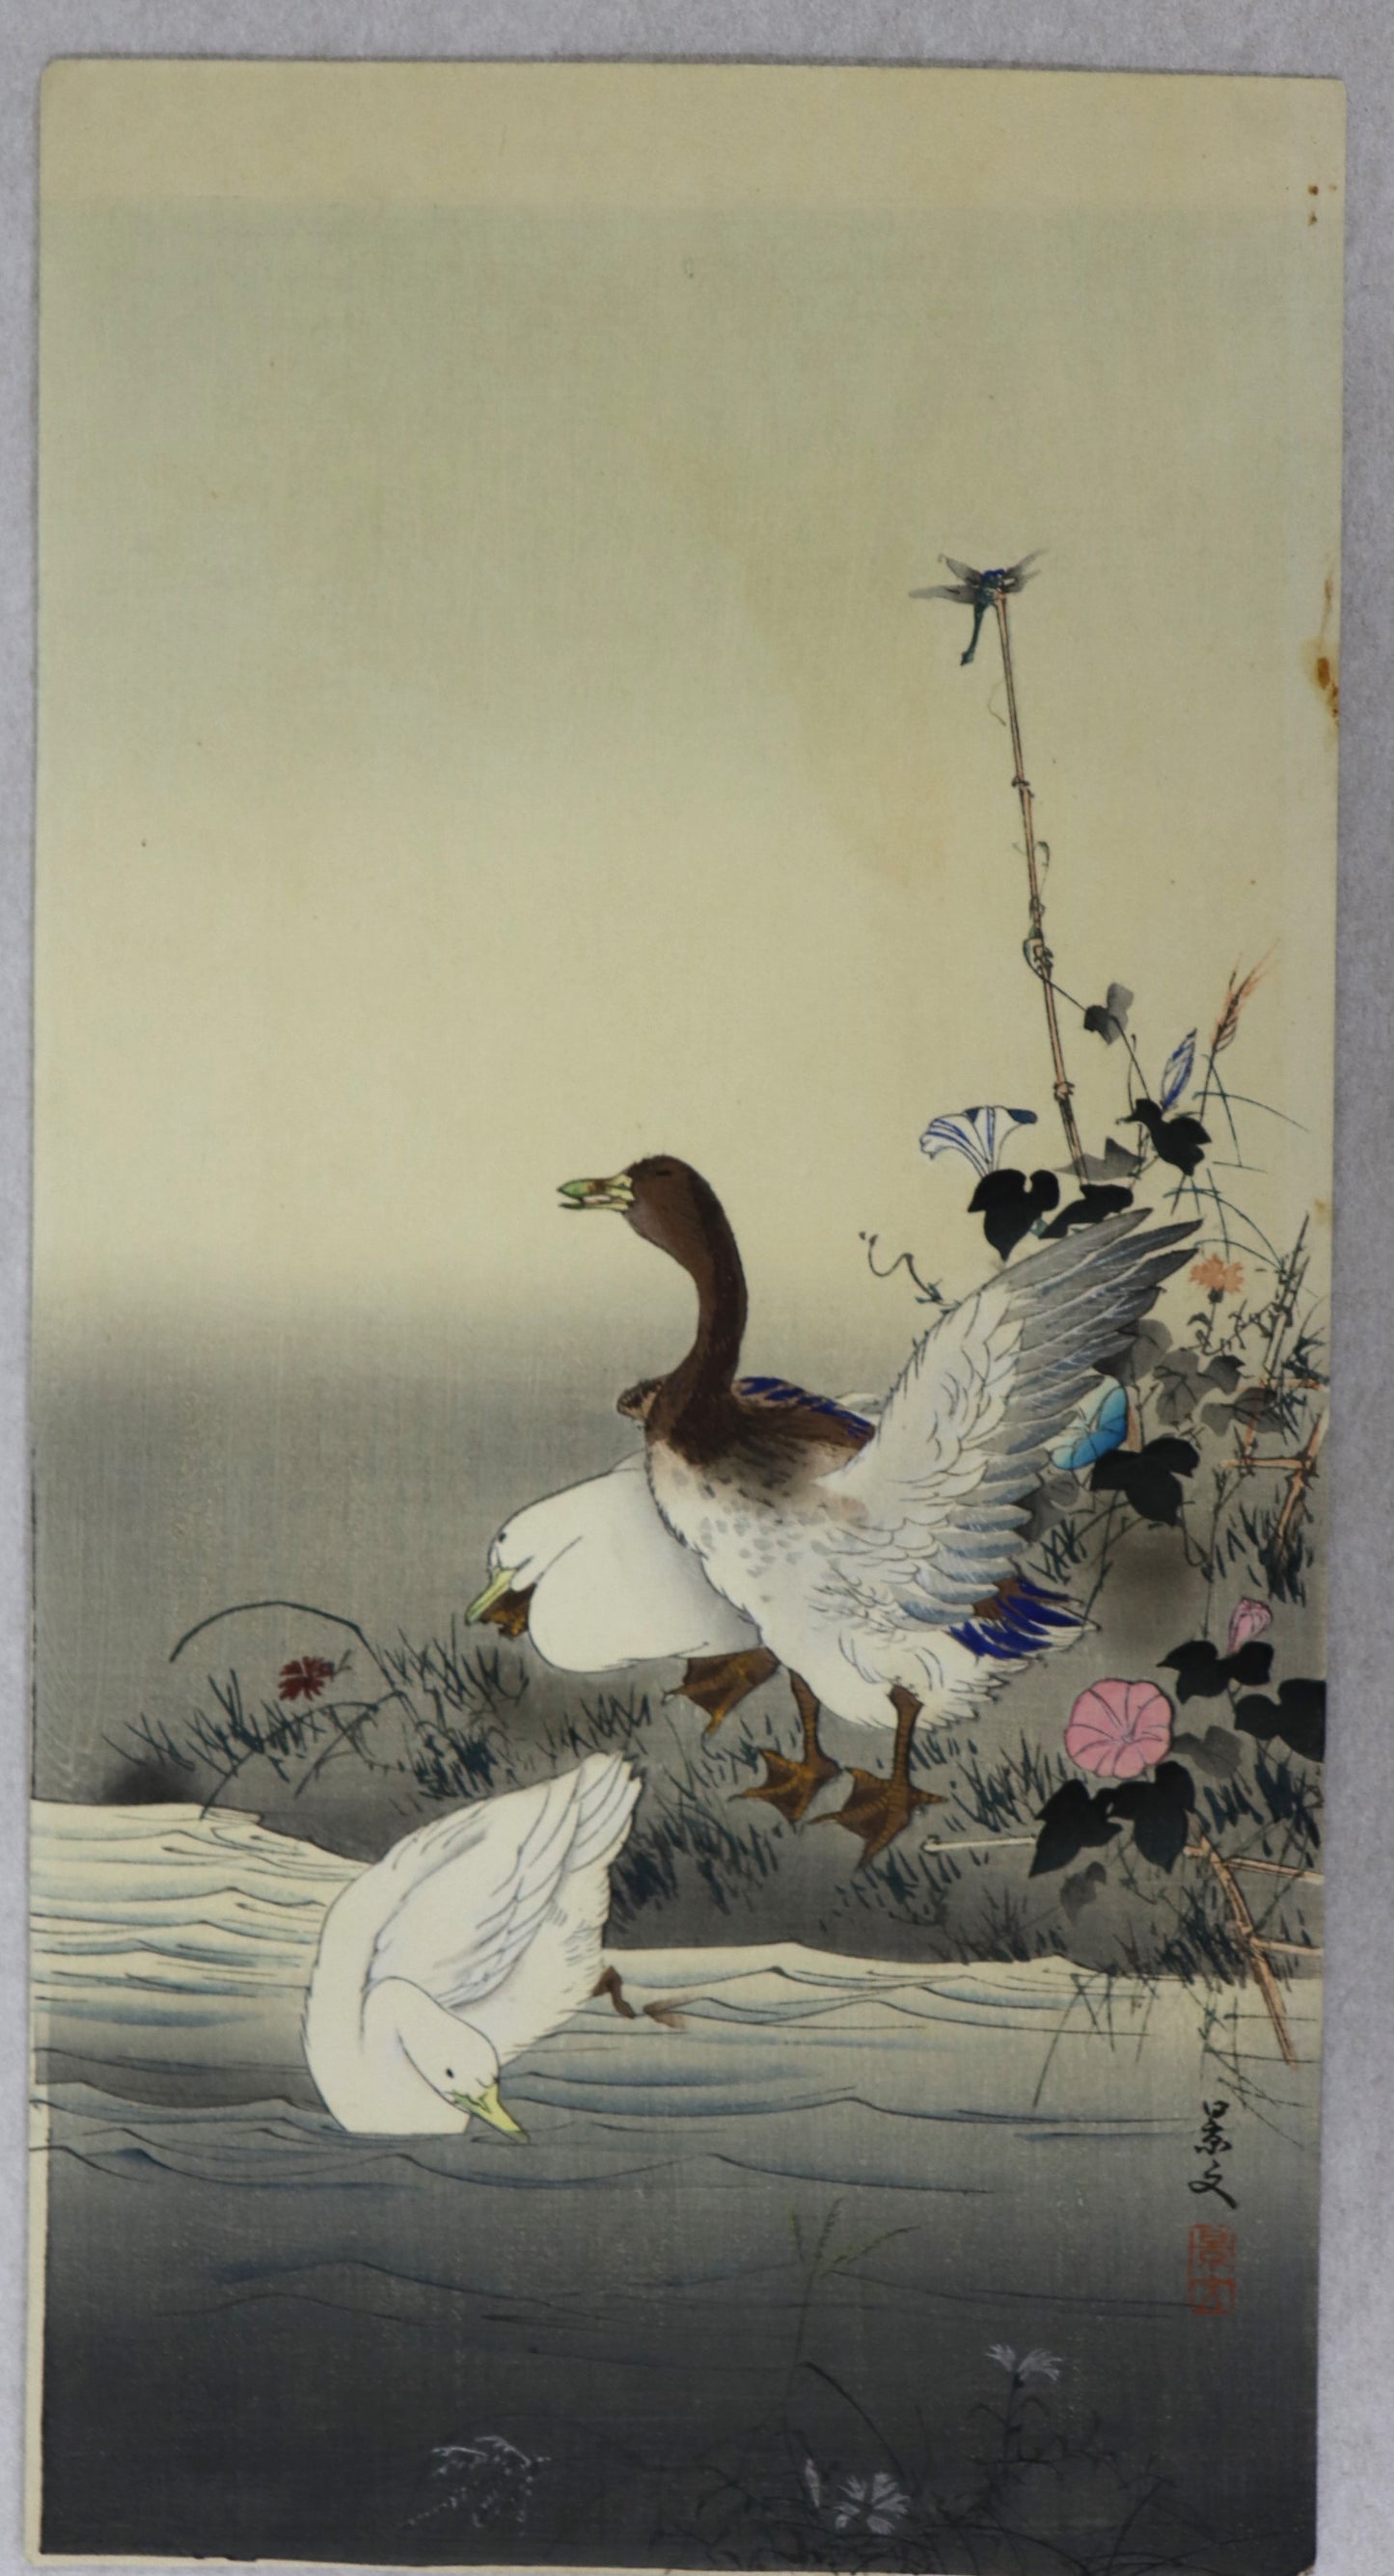 Ducks and dragonfly by Matsumura Keibun / Canards et Libellule par Matsumura Keibun